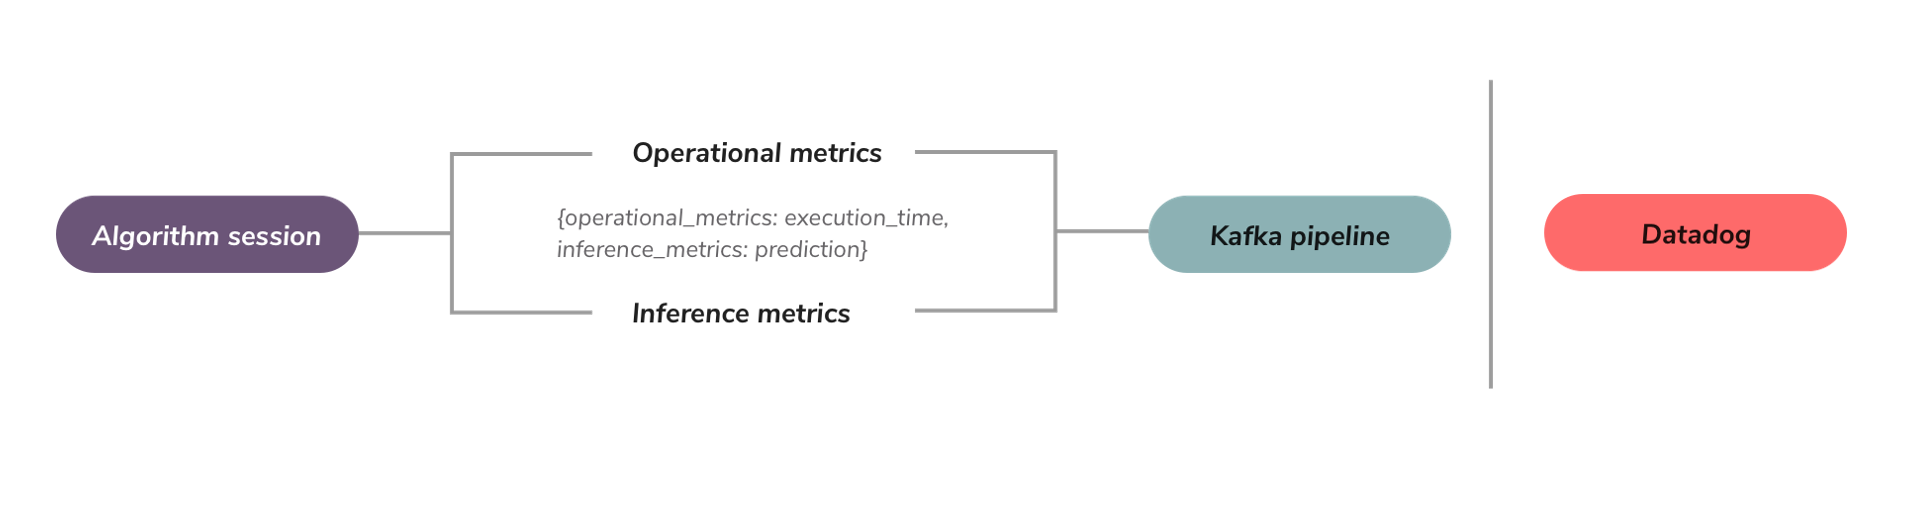 Flow chart of Datadog-Algorithmia integration for operational metrics